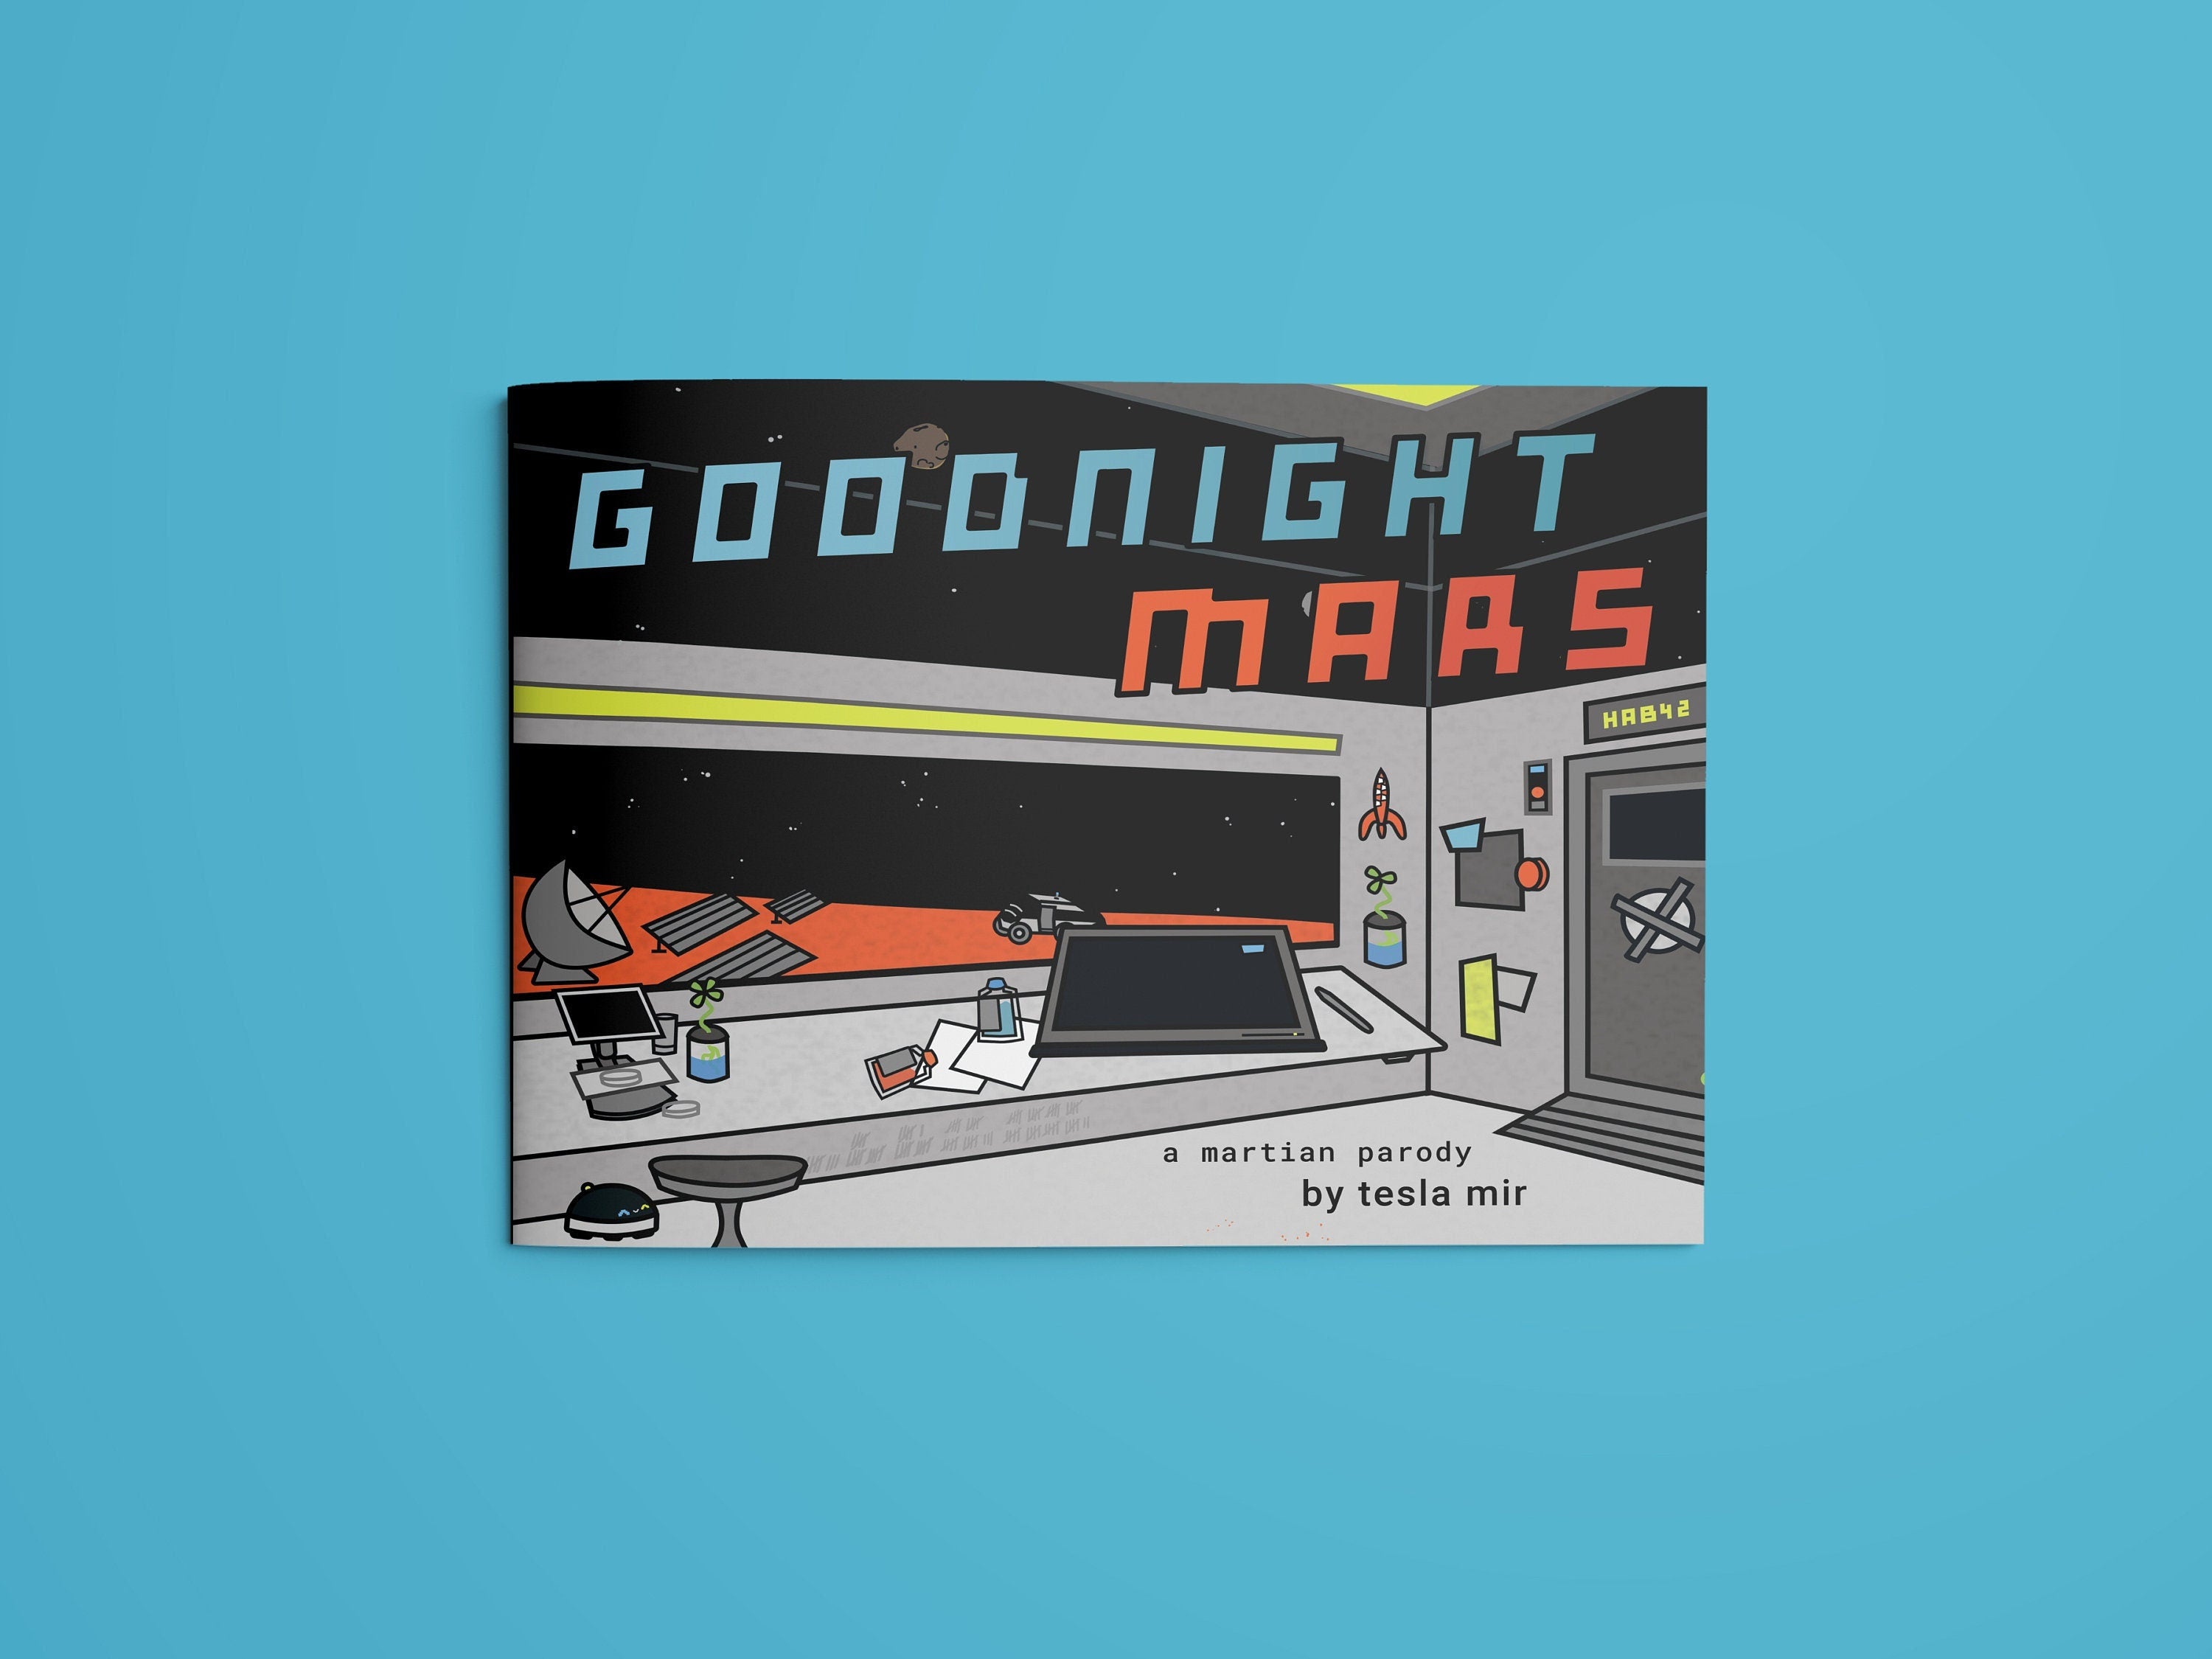 Goodnight Mars Sci-Fi STEM parody book - Children's Illustrated Bedtime Space / Astronomy Story - Goodnight Moon Parody